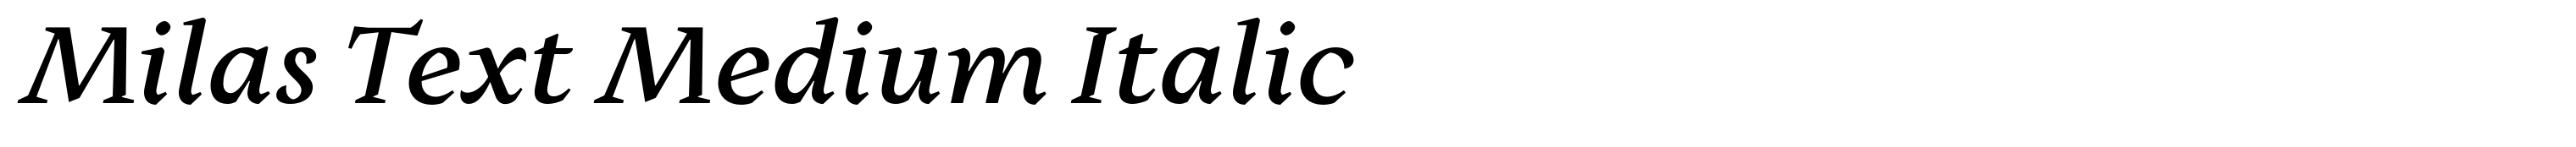 Milas Text Medium Italic